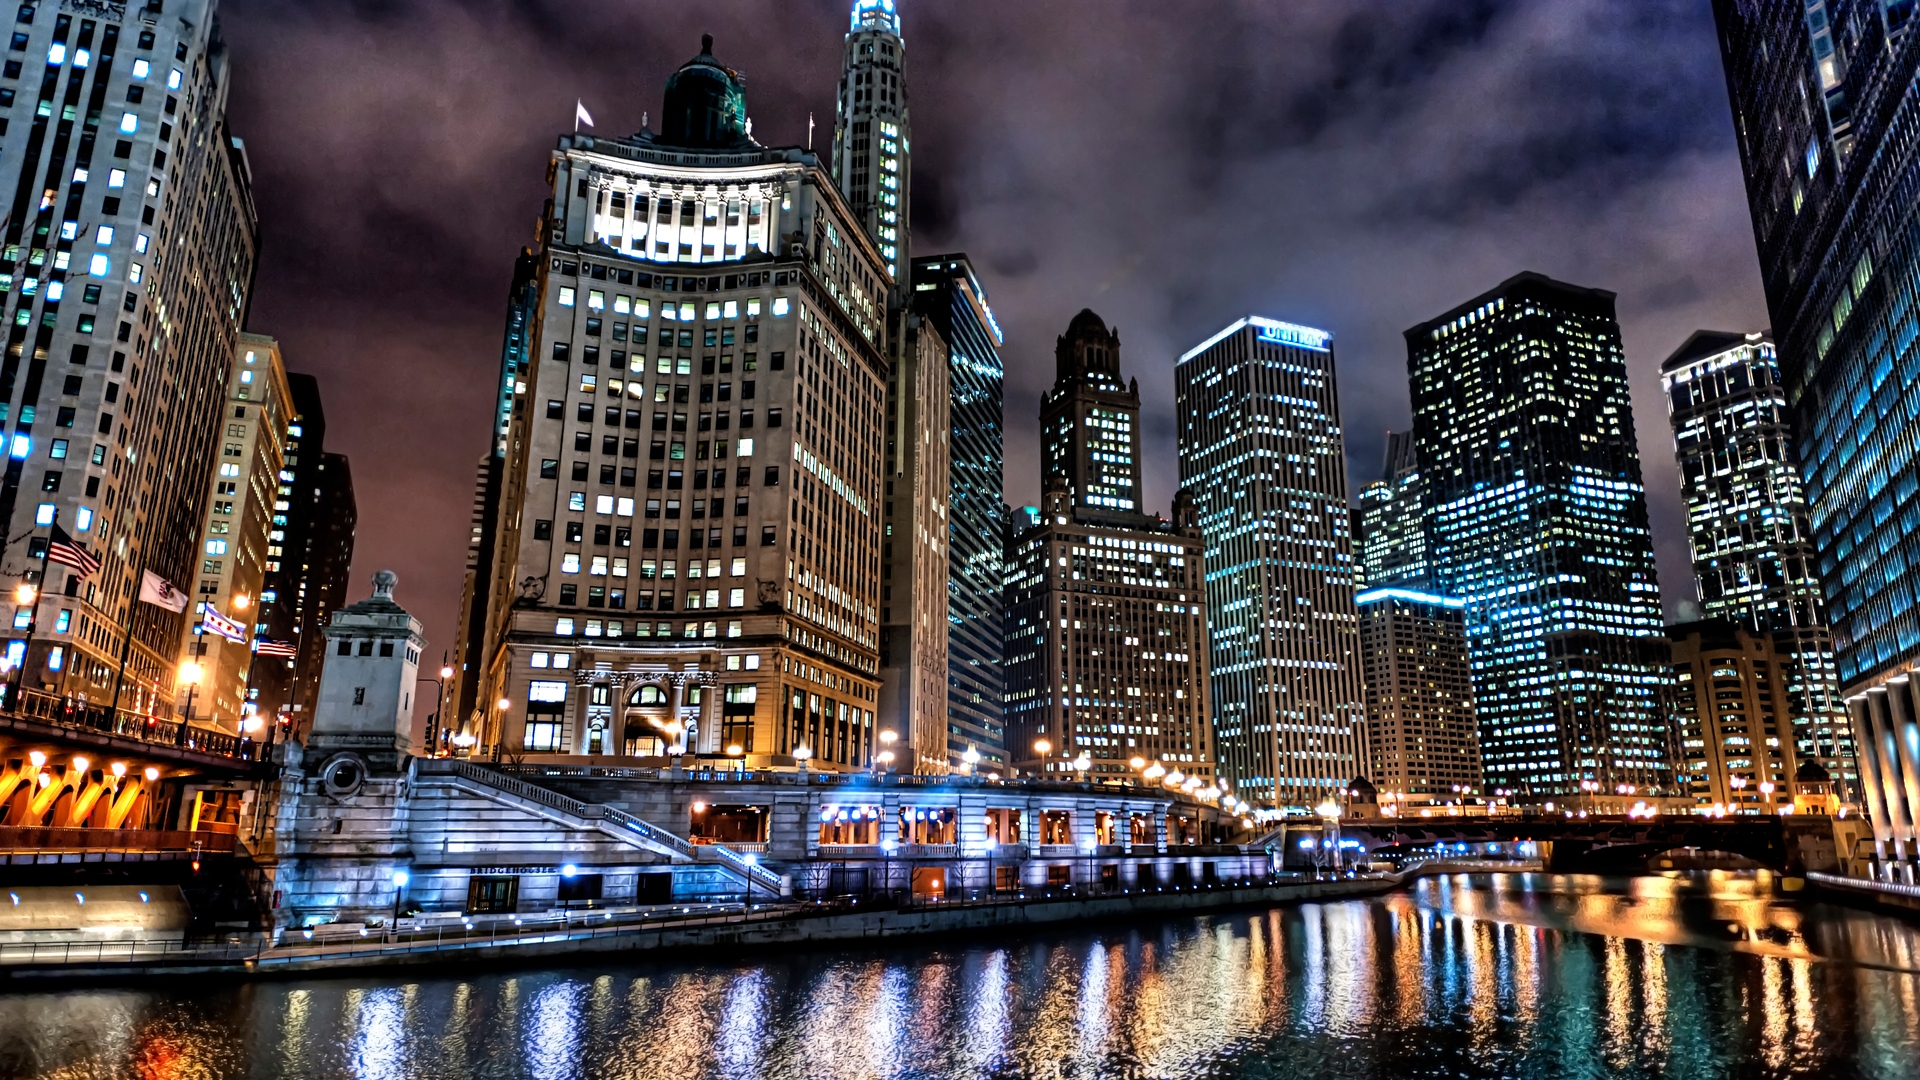 Chicago Night Lights for 1920 x 1080 HDTV 1080p resolution